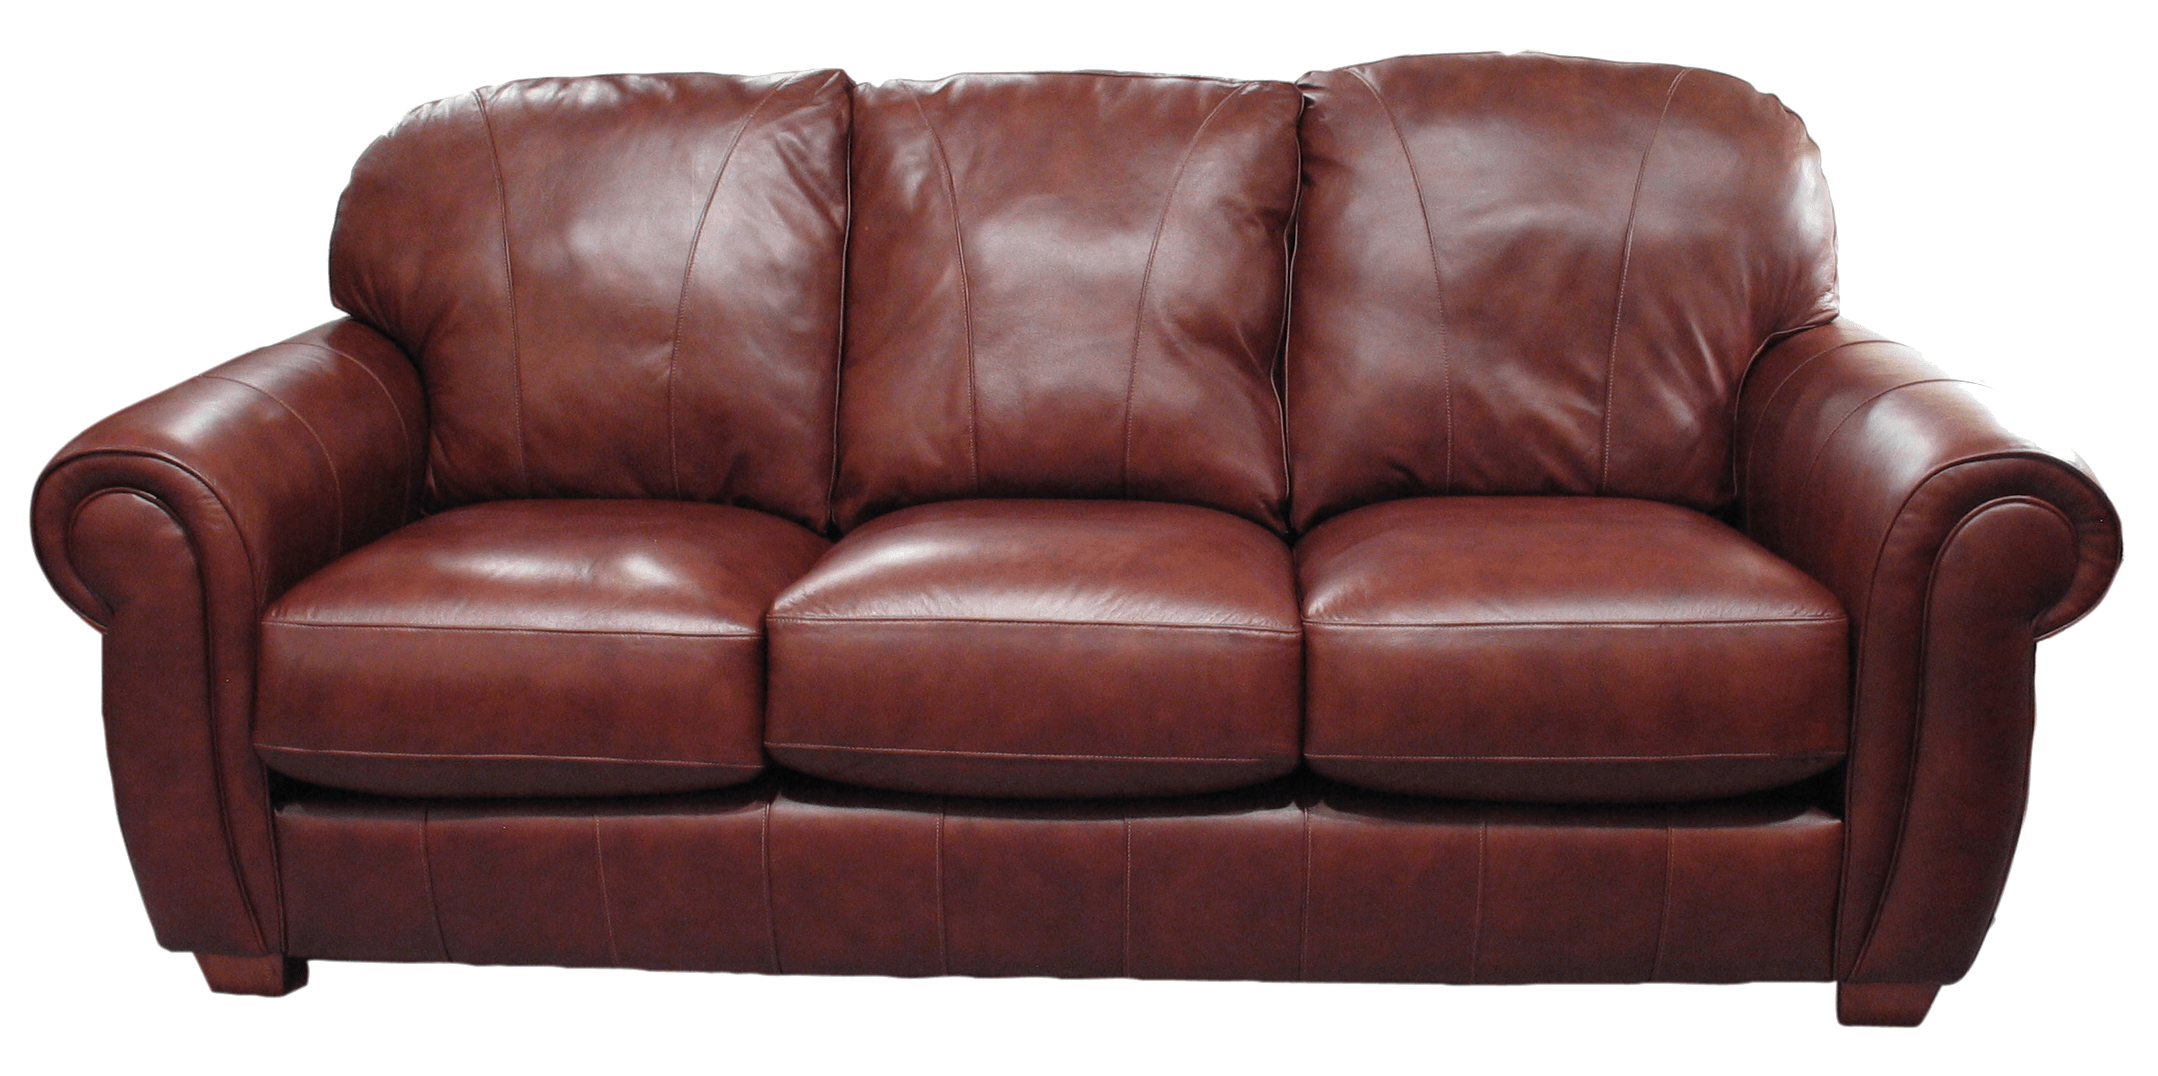 Brown Sofa Png Image PNG Image